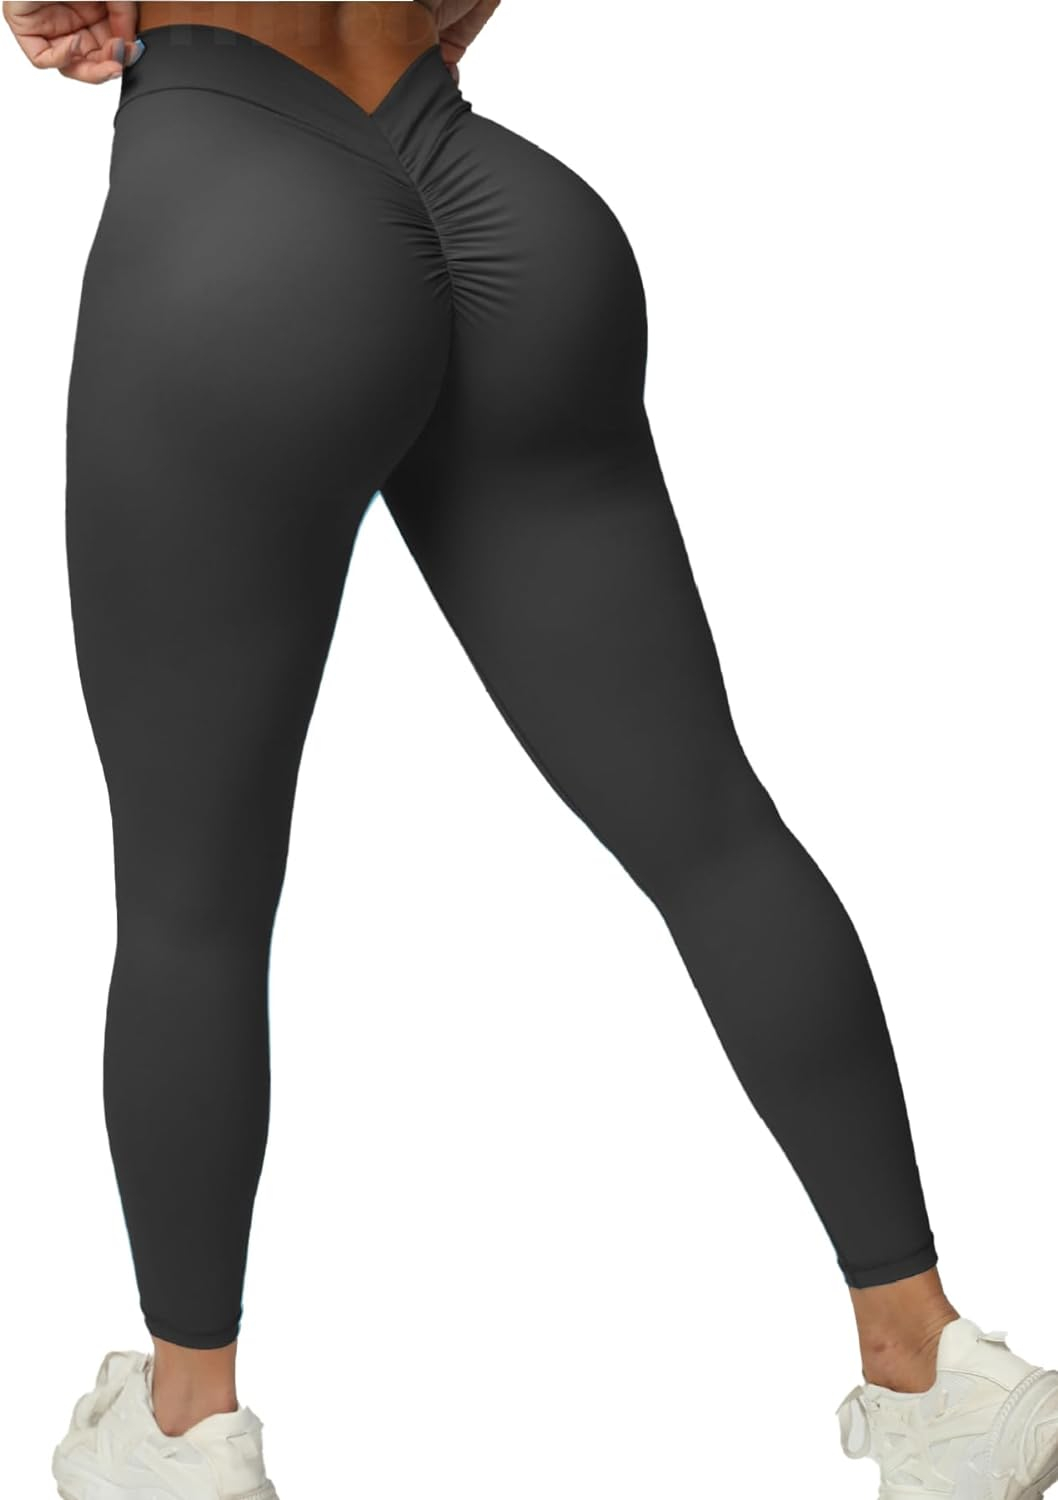 FITTOO V-Back Scrunch Butt Lift Leggings for Women High Waist Tummy Control Booty Gym Workout Yoga Pants